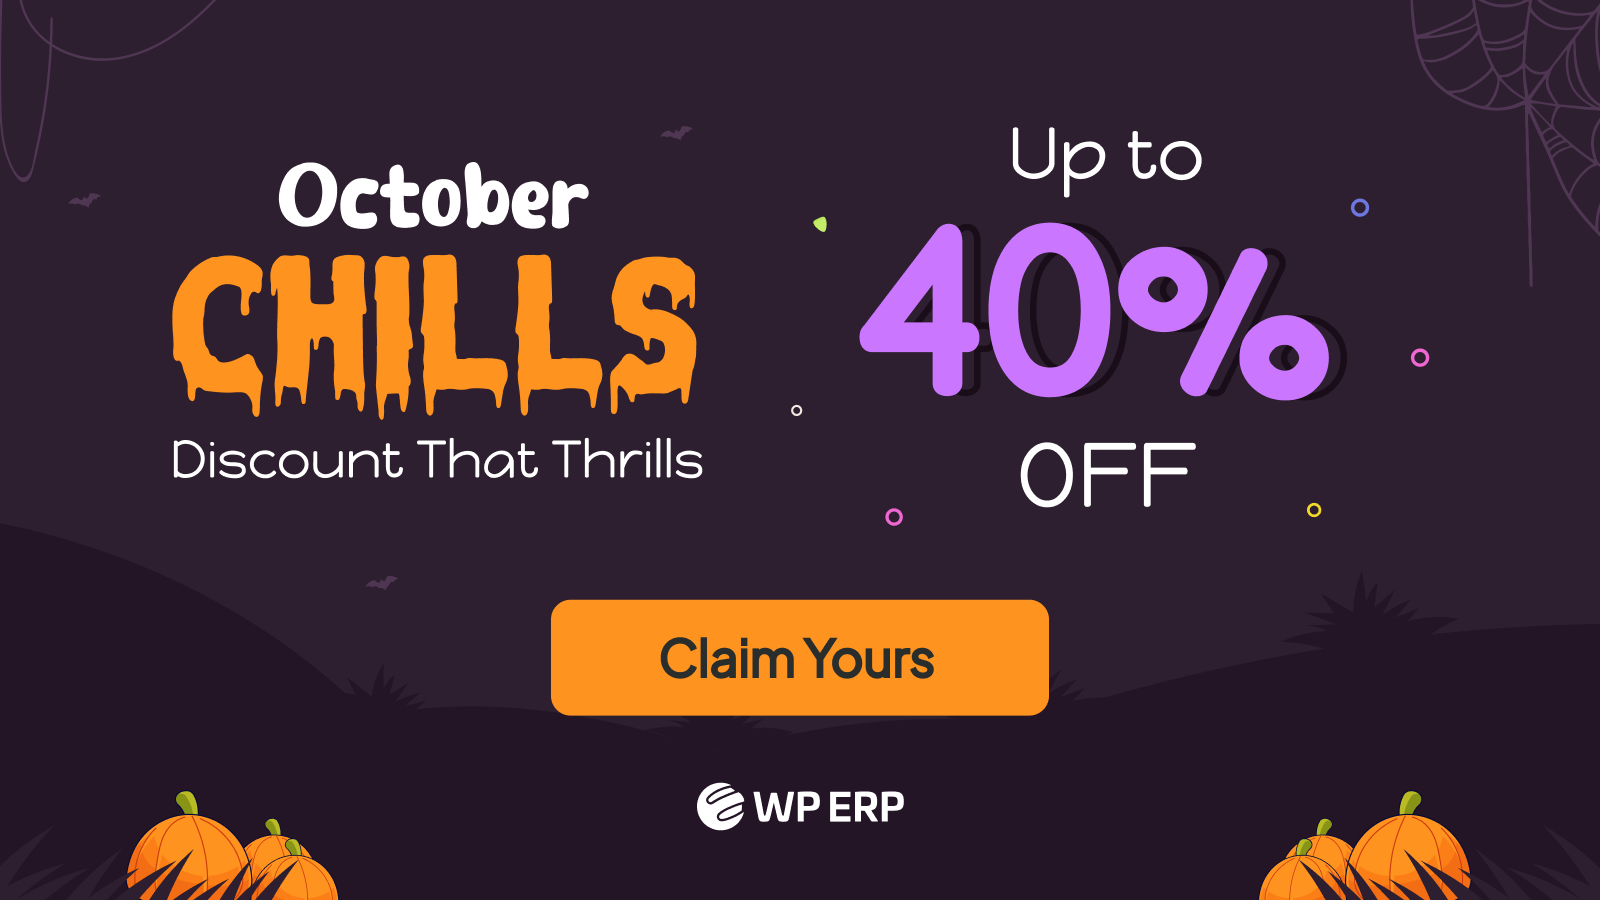 WP ERP Halloween Deals